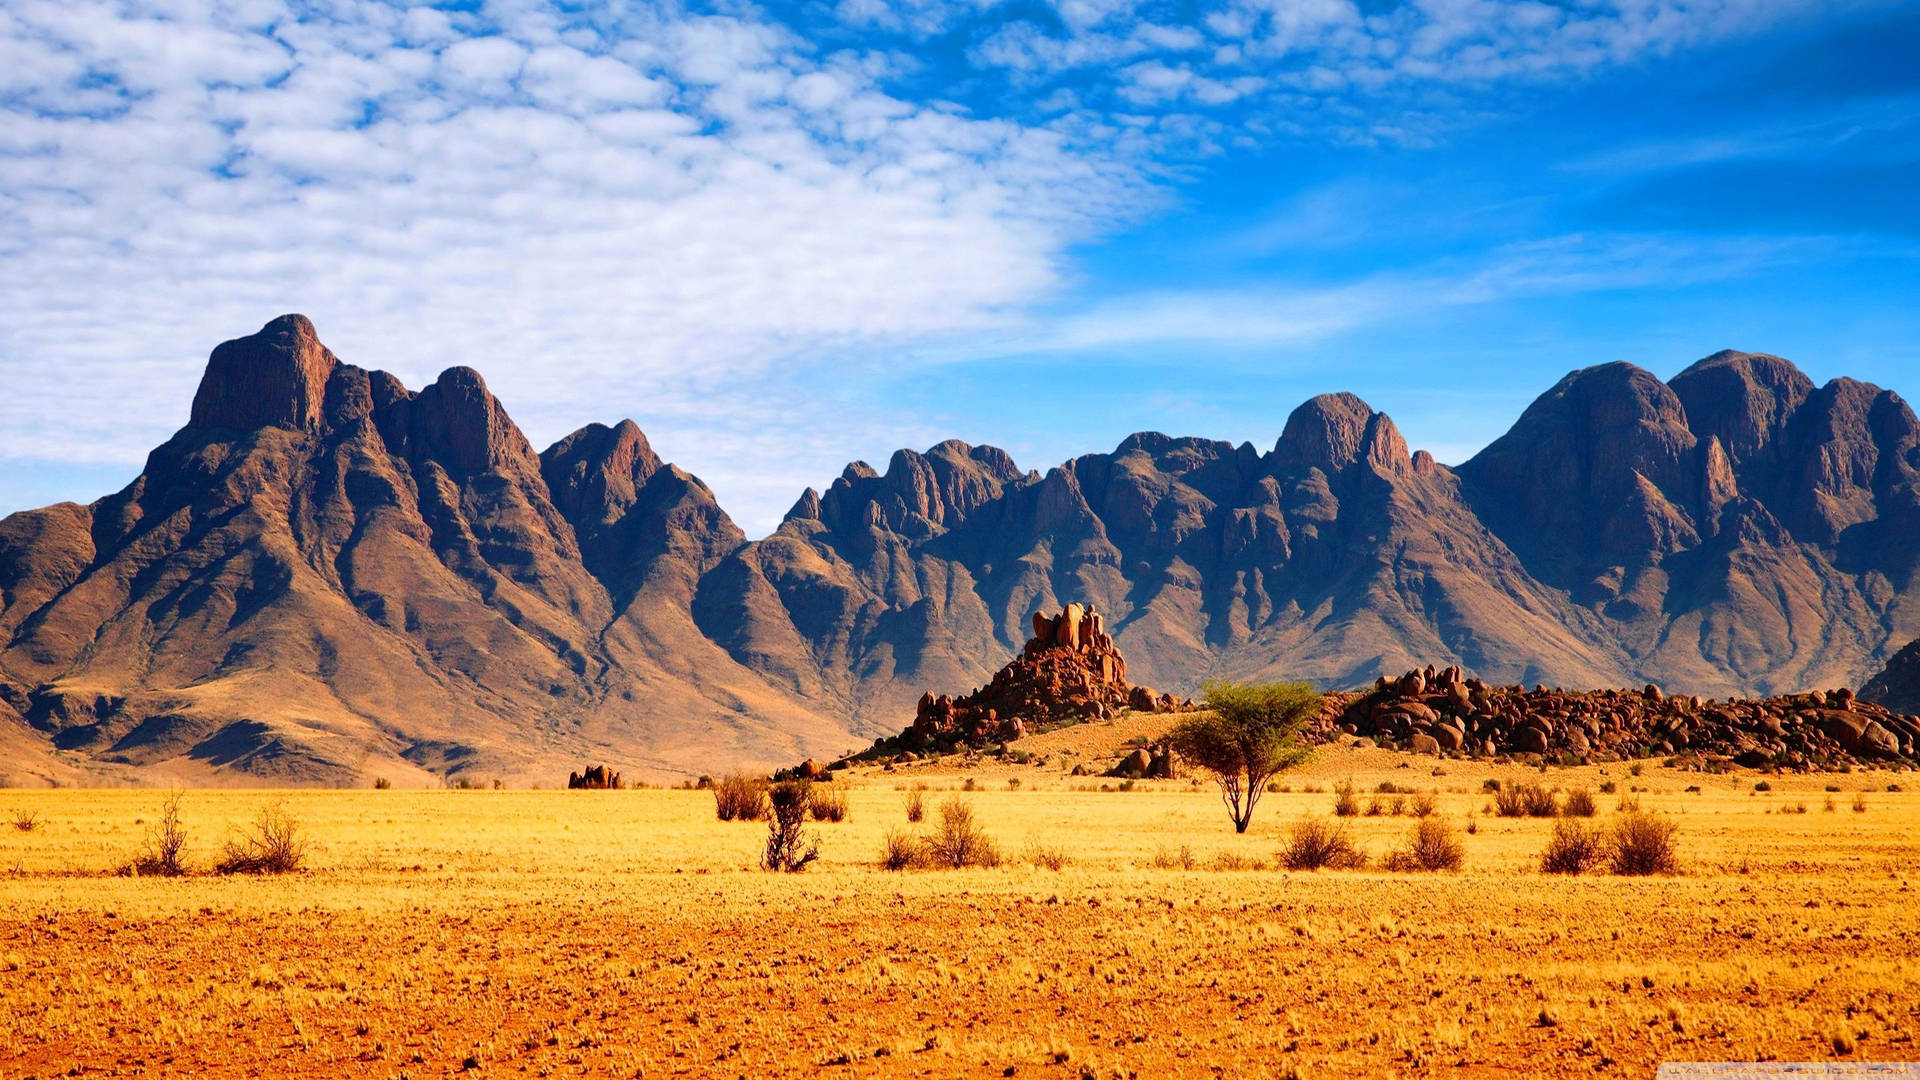 Desert Mountains Ridge In South Africa Wallpaper